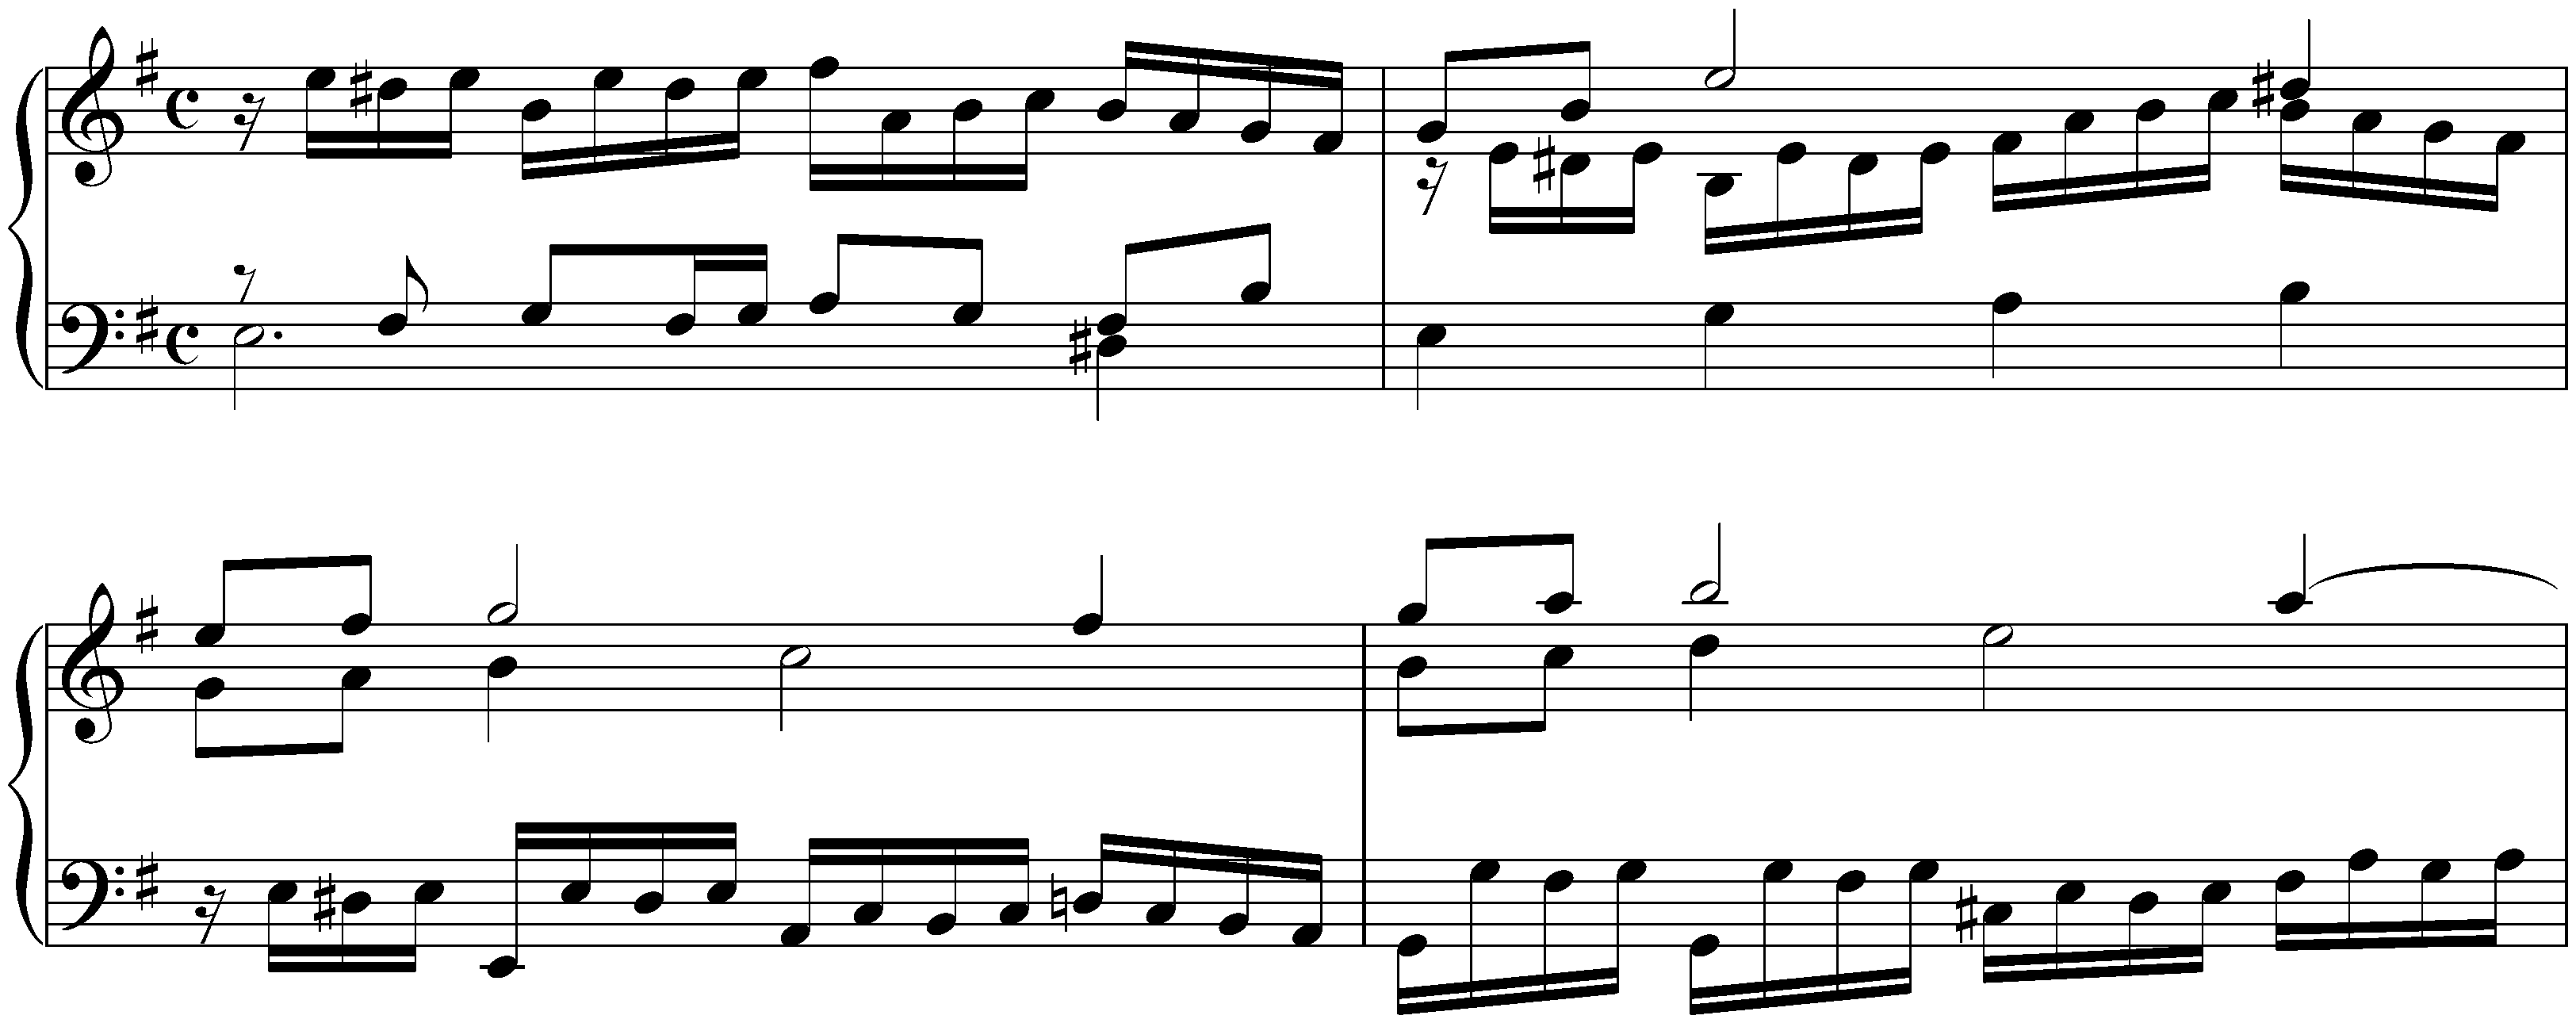 Nine little Preludes from the Notebook for Wilhelm Friedemann Bach, BWV 924–932; 9. E minor, BWV 932